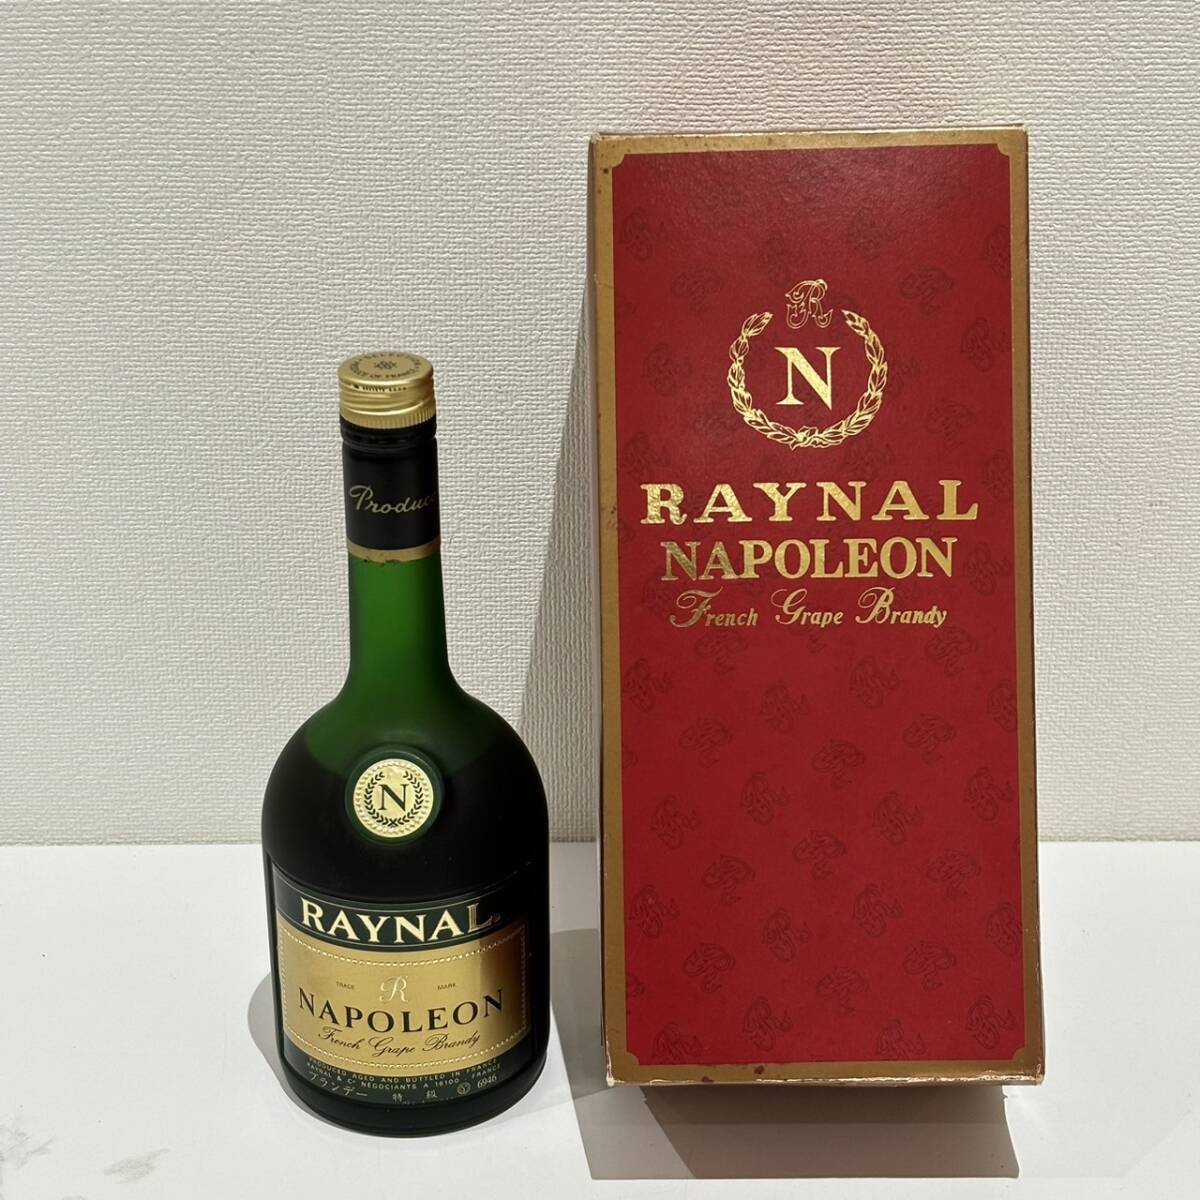 [AMT-10397a] sake summarize Napoleon set NAPOLEON Suntory Ray flannel do- Bill maxi m Val coat Special class brandy old sake sake 